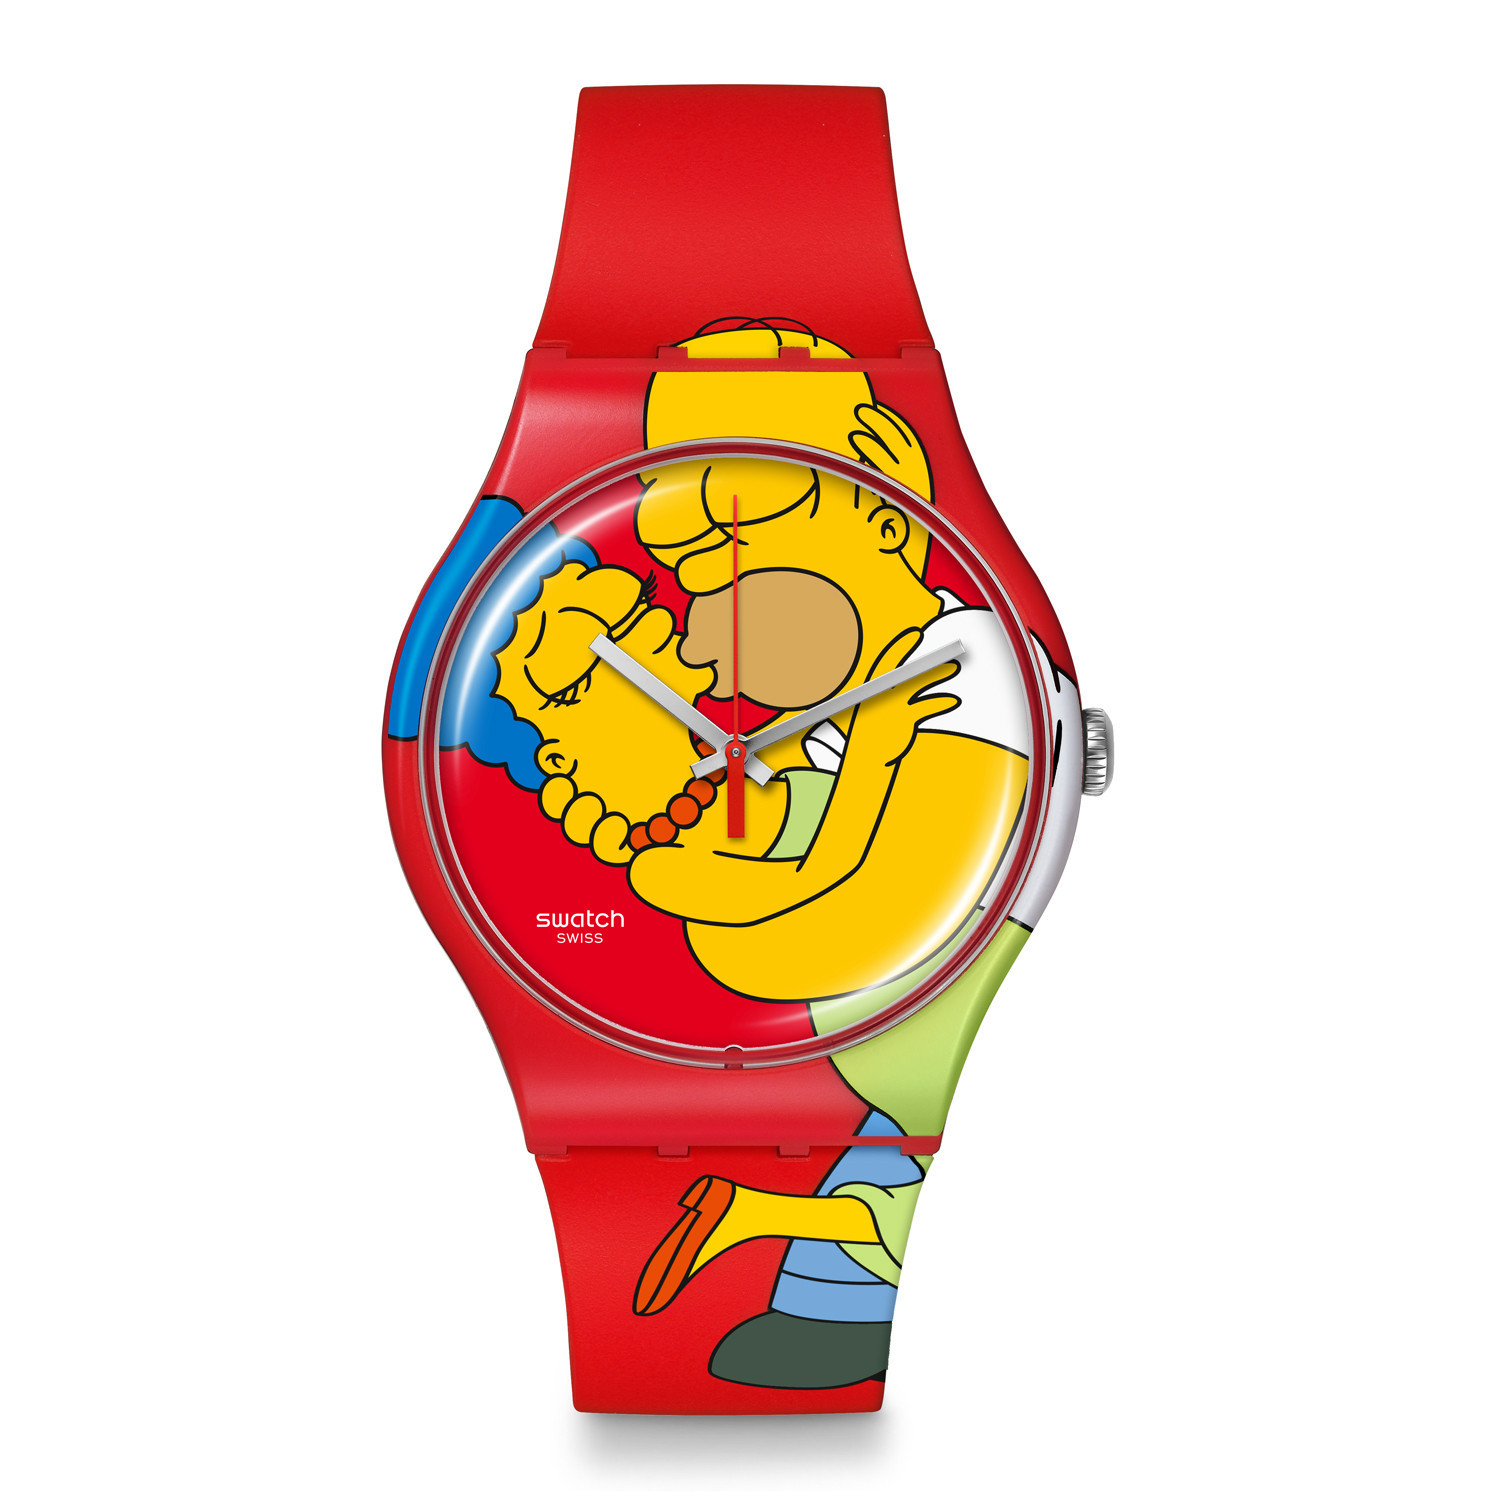 Montre Swatch collection The Simpsons Swett Embrace
Edition Saint Valentin